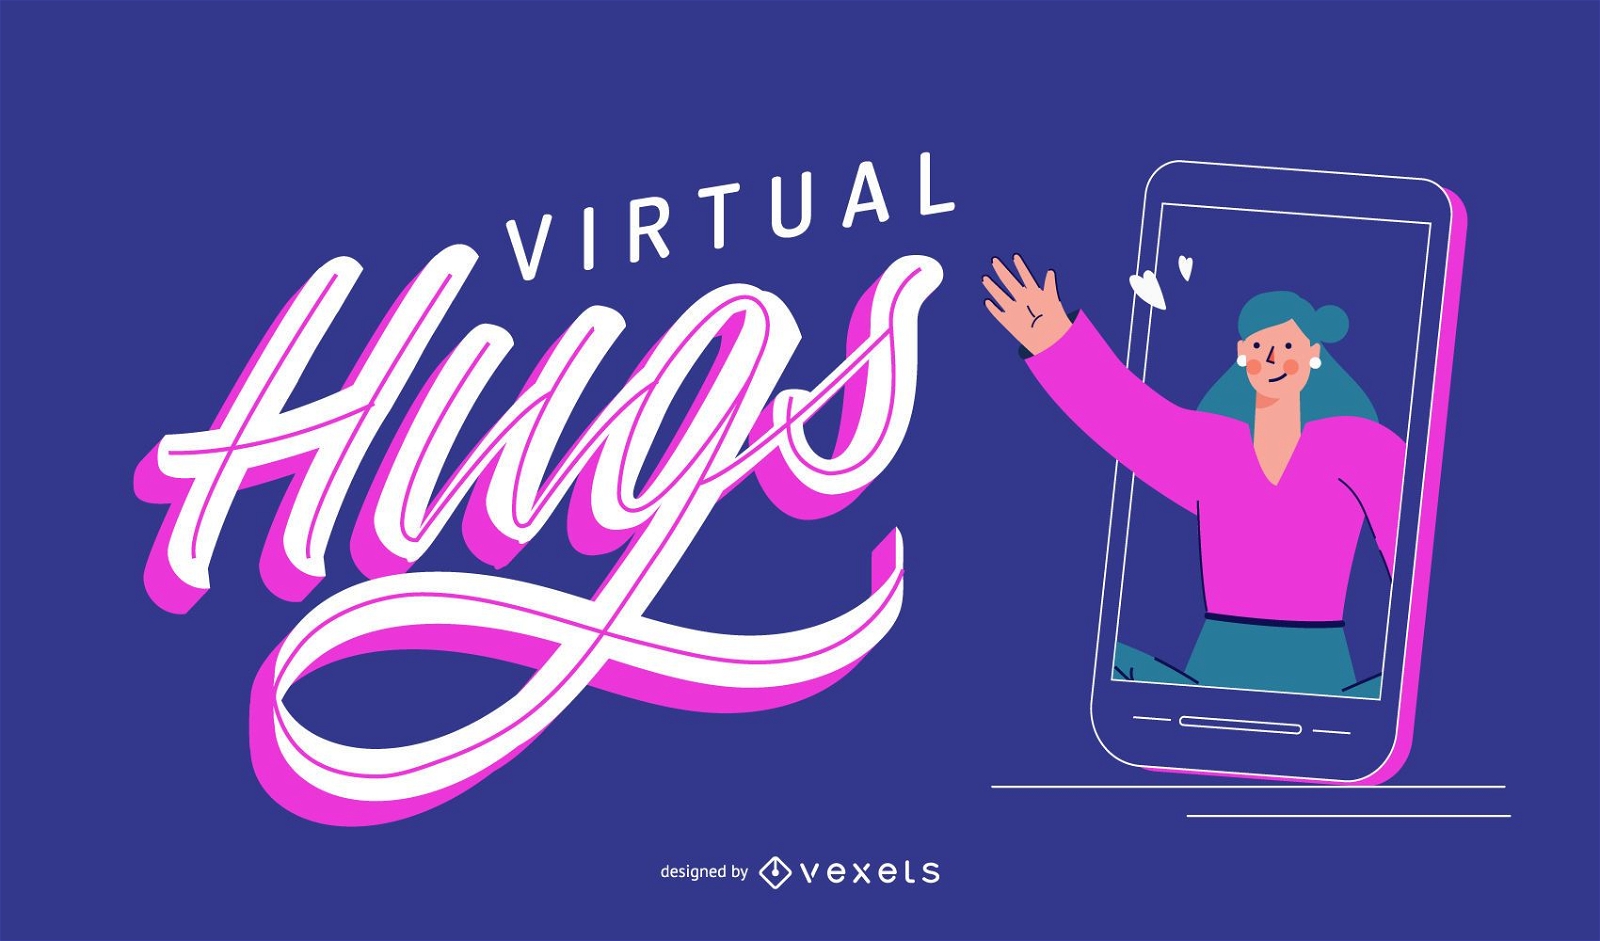 Letras do Coronavirus Virtual Hugs